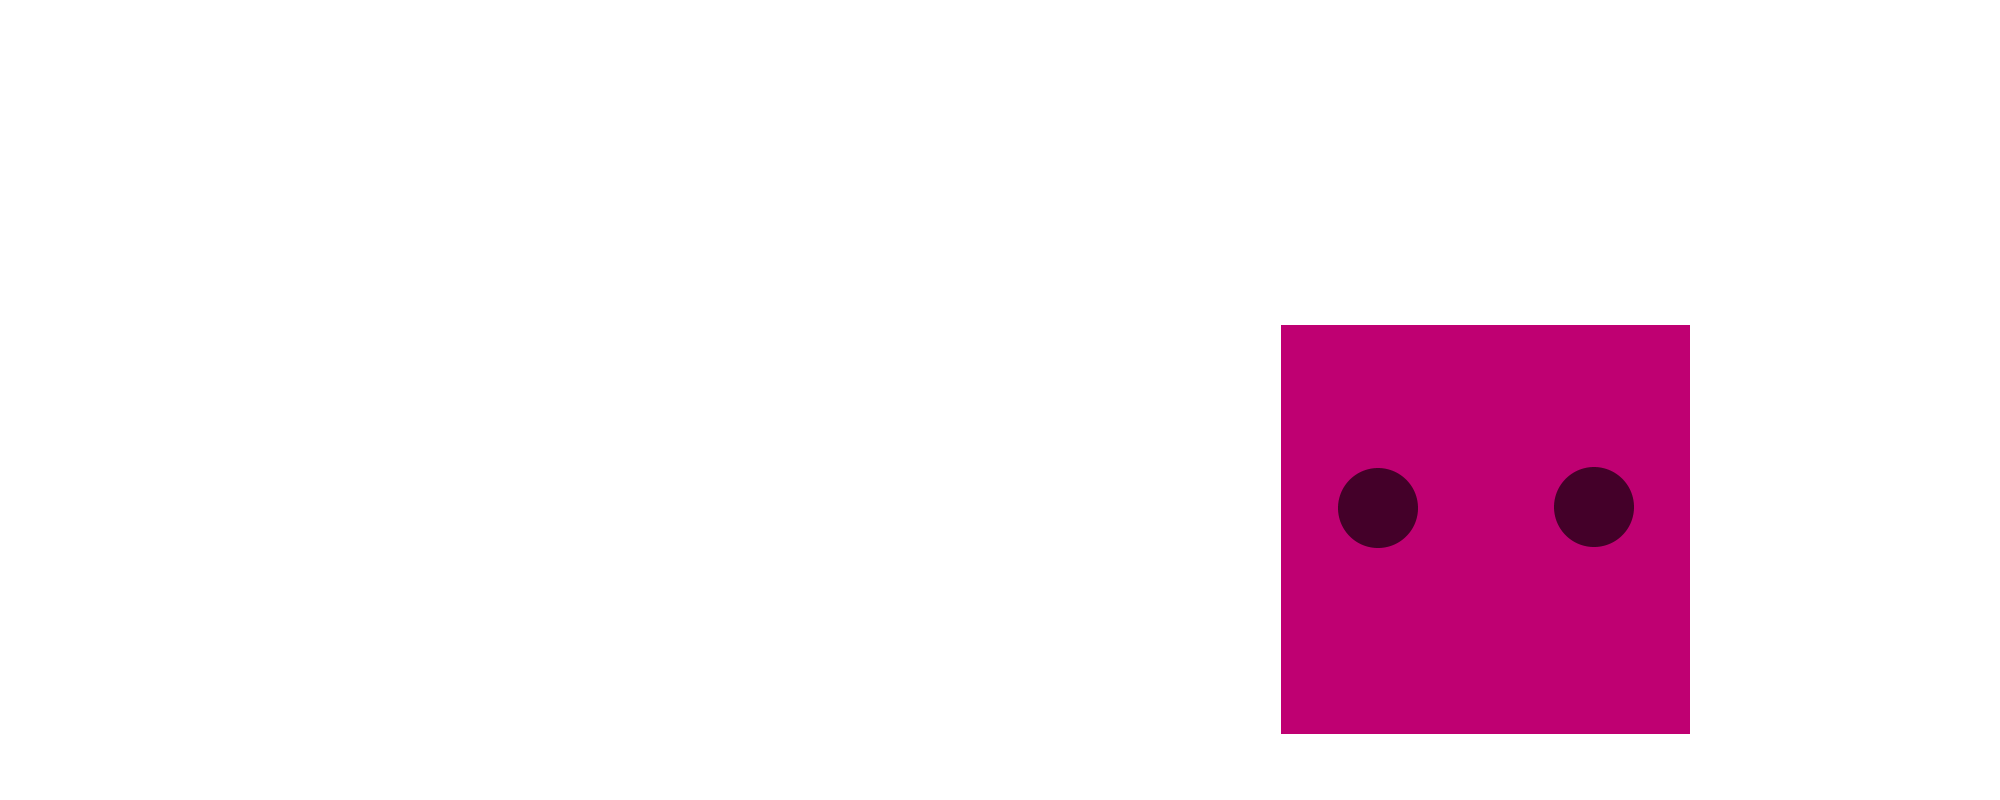 Patrick's Parabox logo